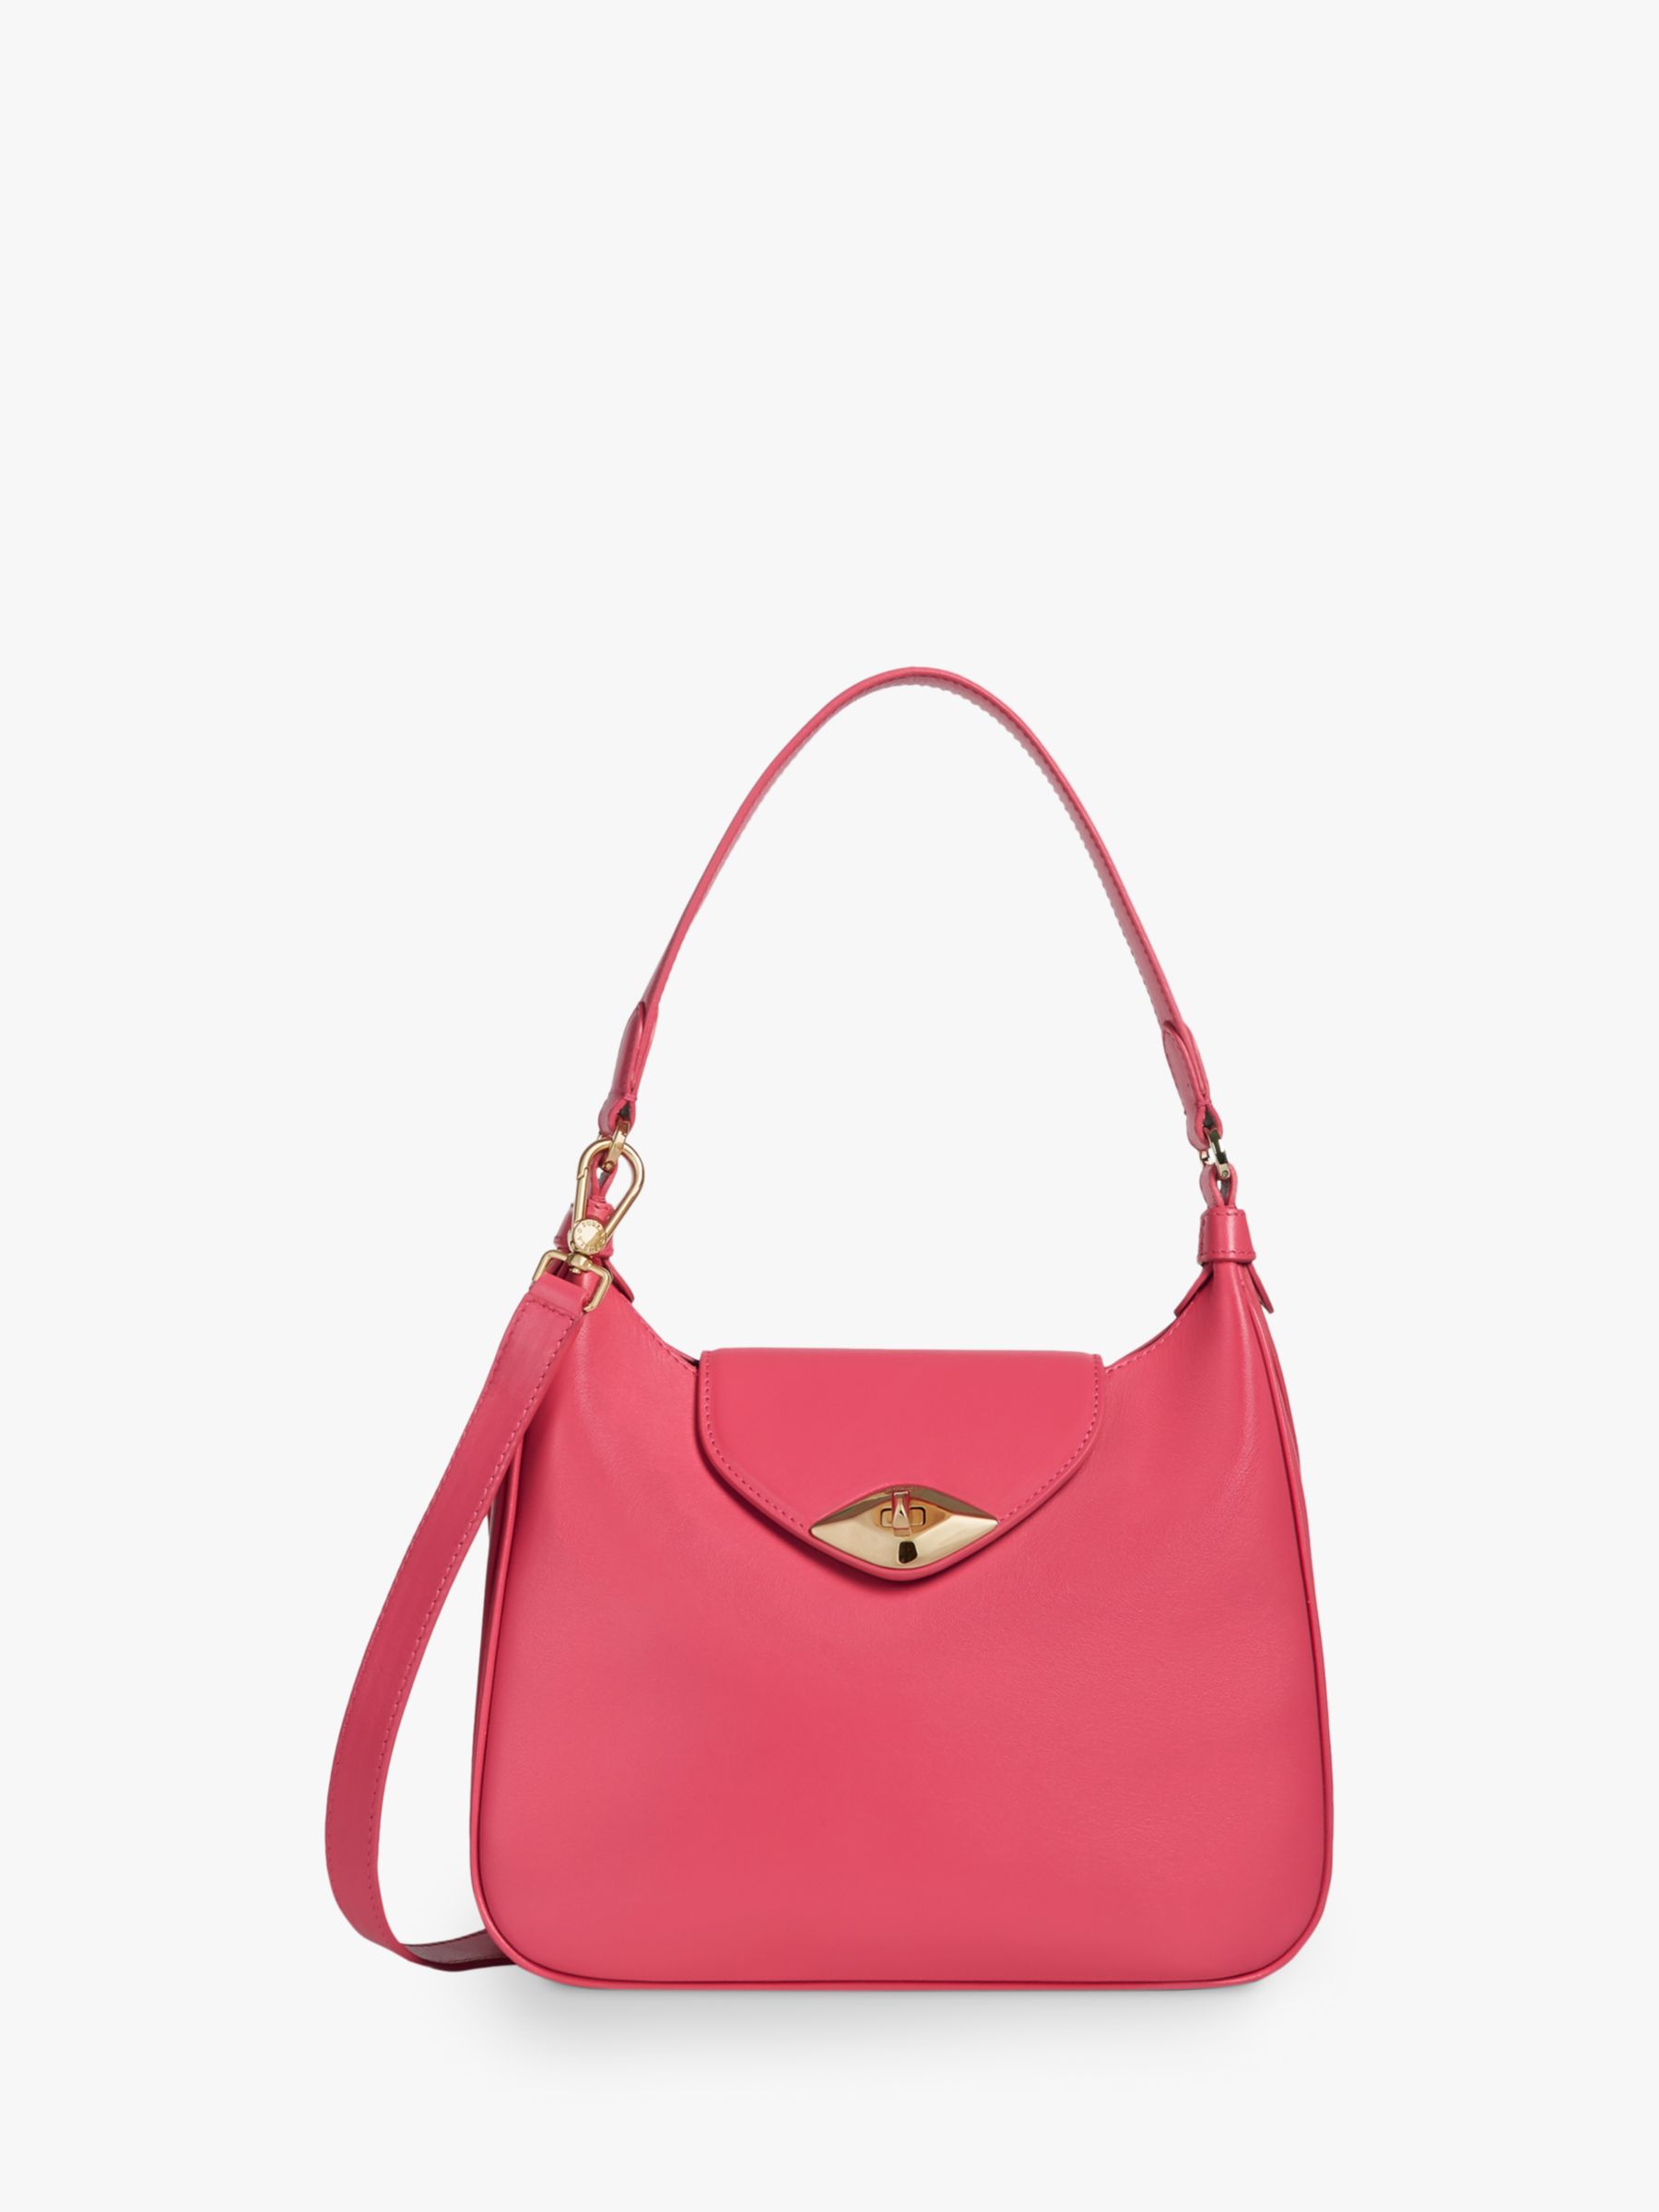 Furla Handbags 25% Off, Only US$89.99 For A Bag!